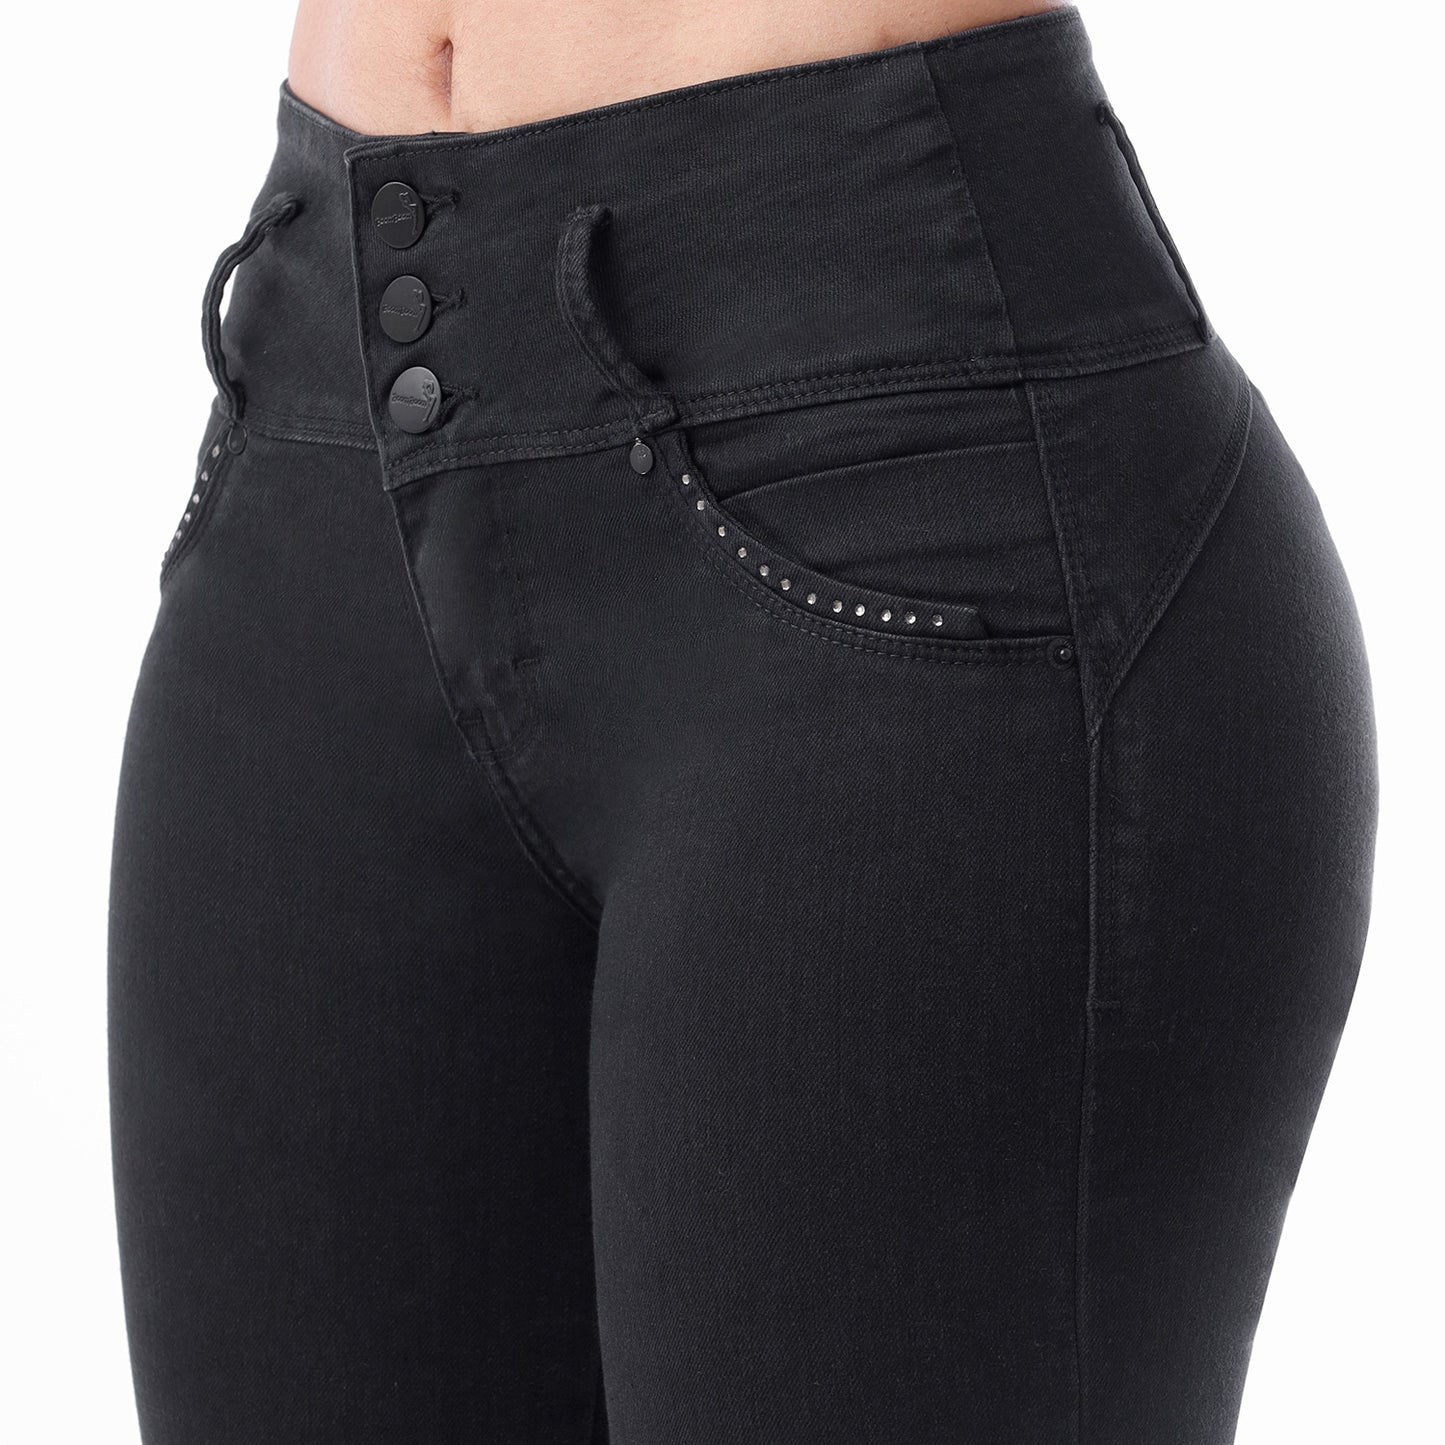 Jeans Push Up Mujer Pitillo Semi Cintura Carbón - 220348